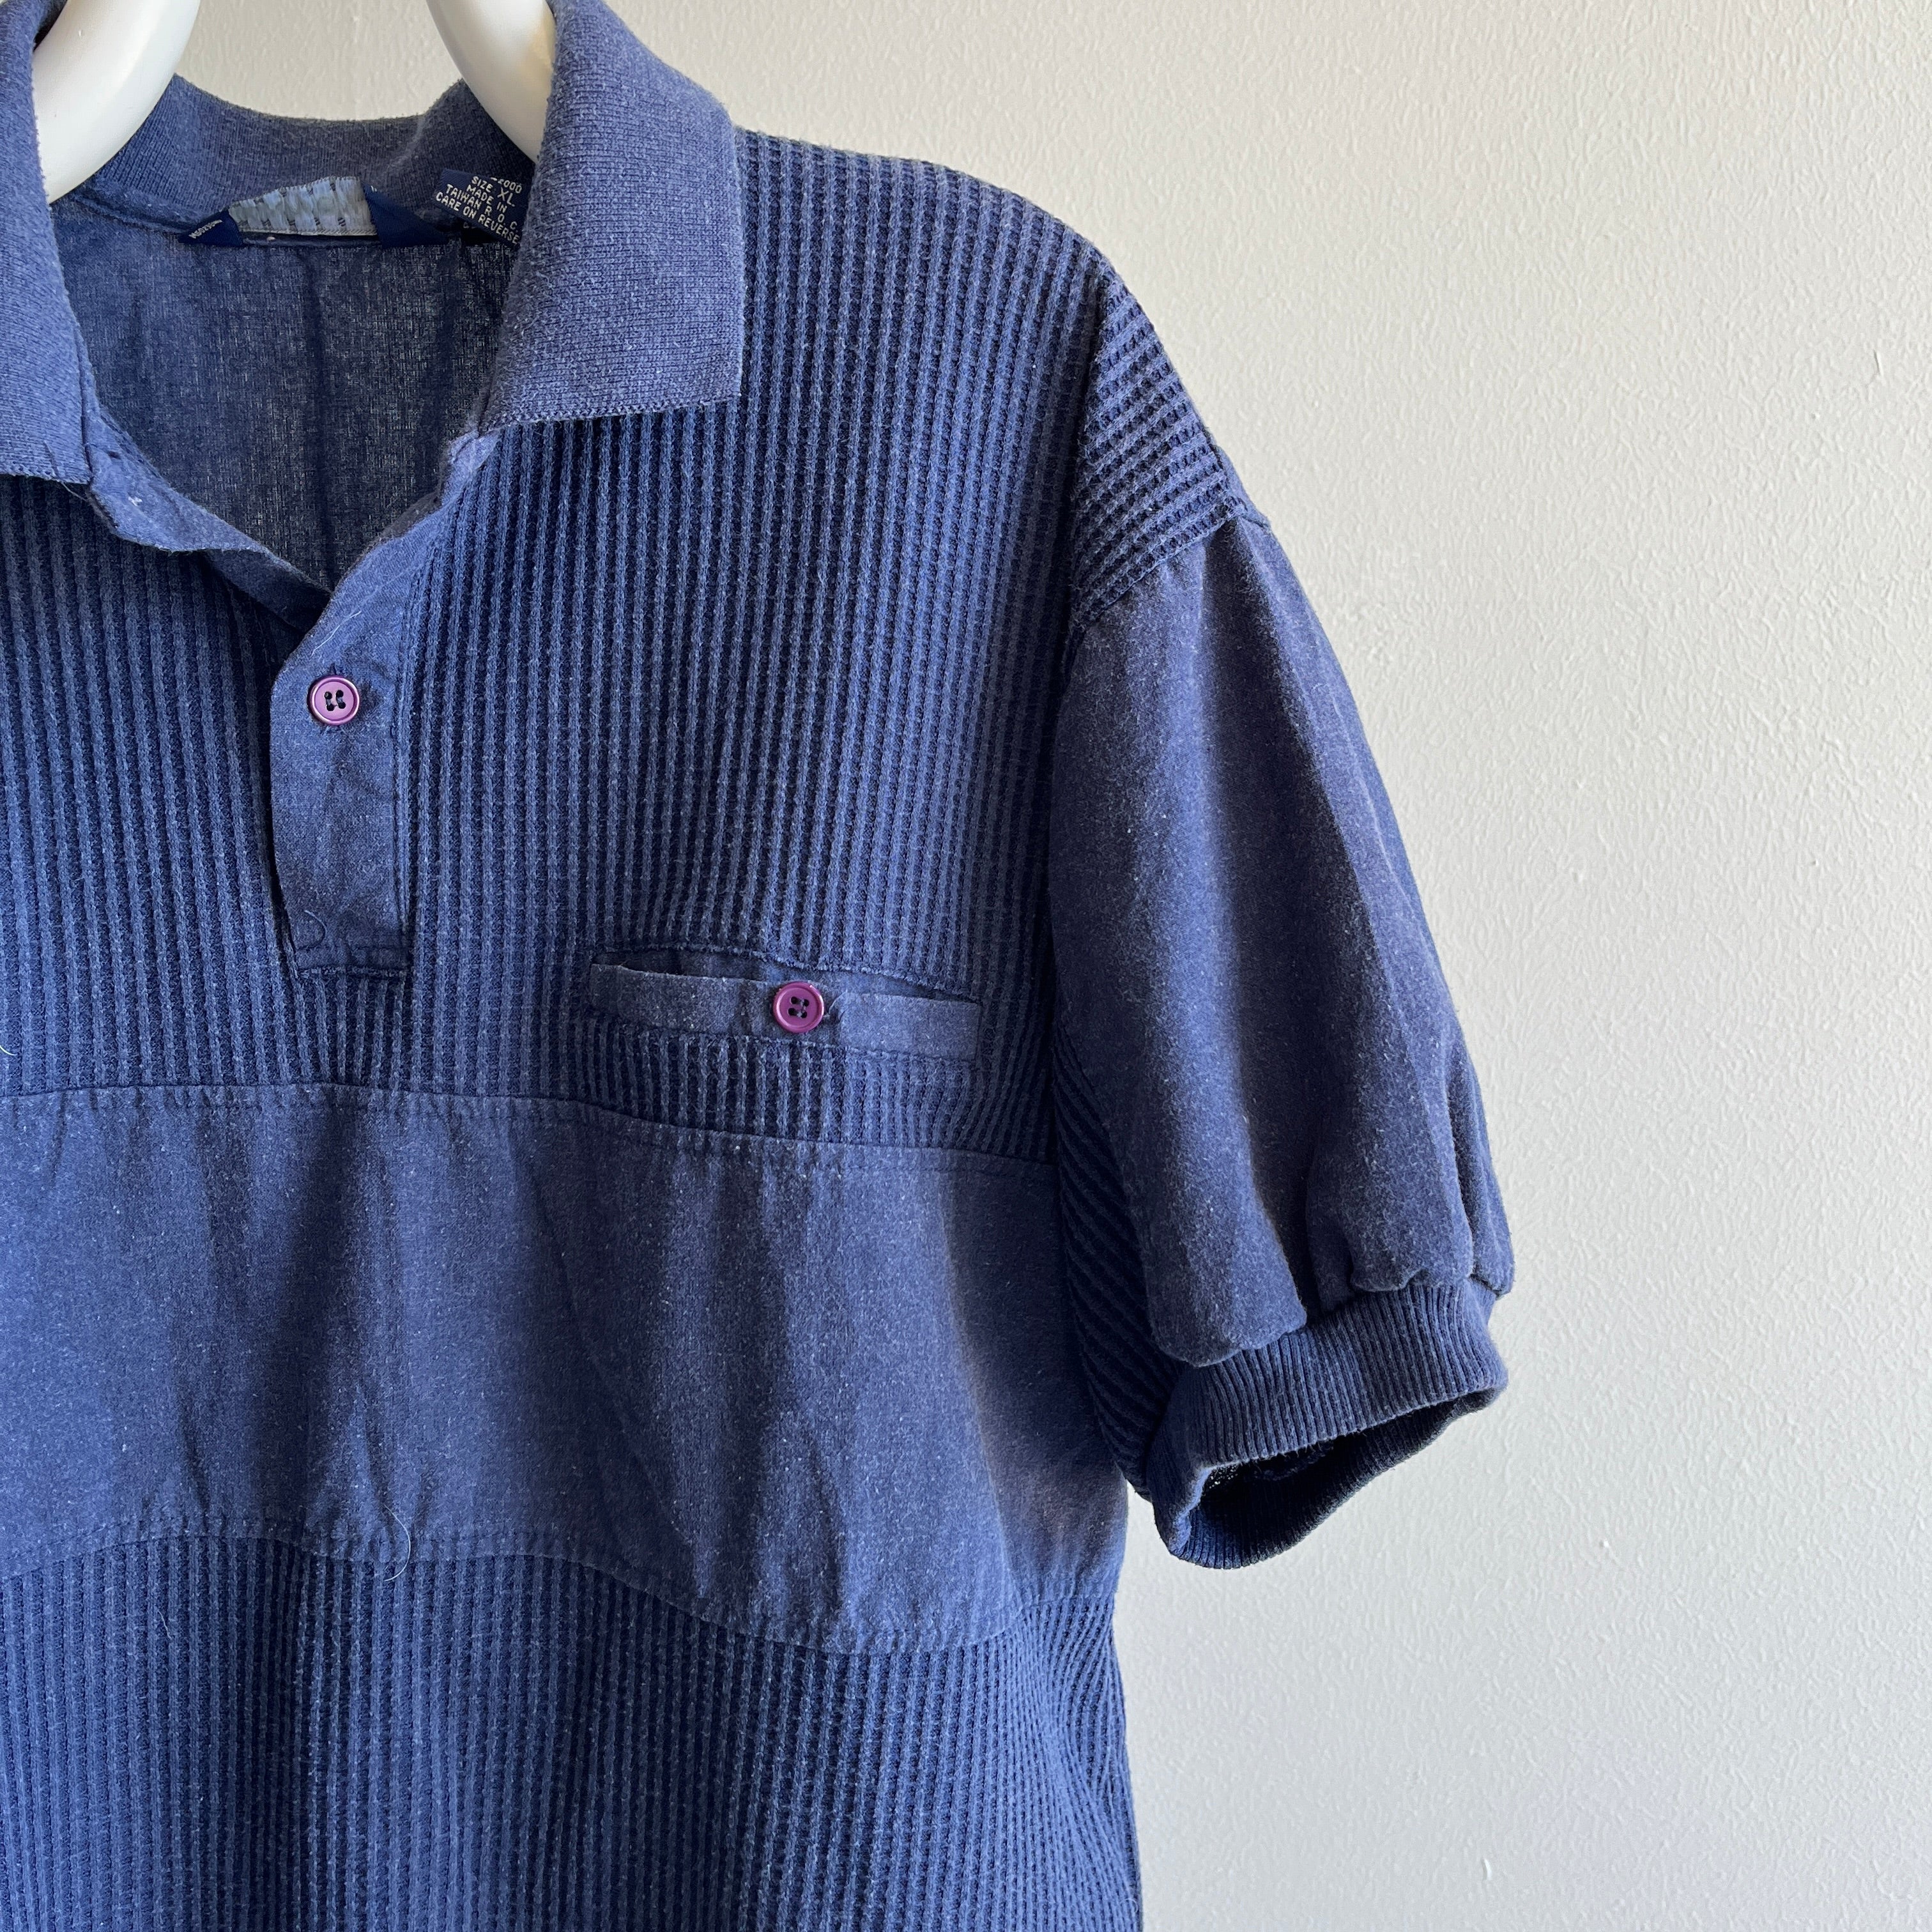 1980s RAD RAD RAD Polo Warm Up Blouse Shirt Top